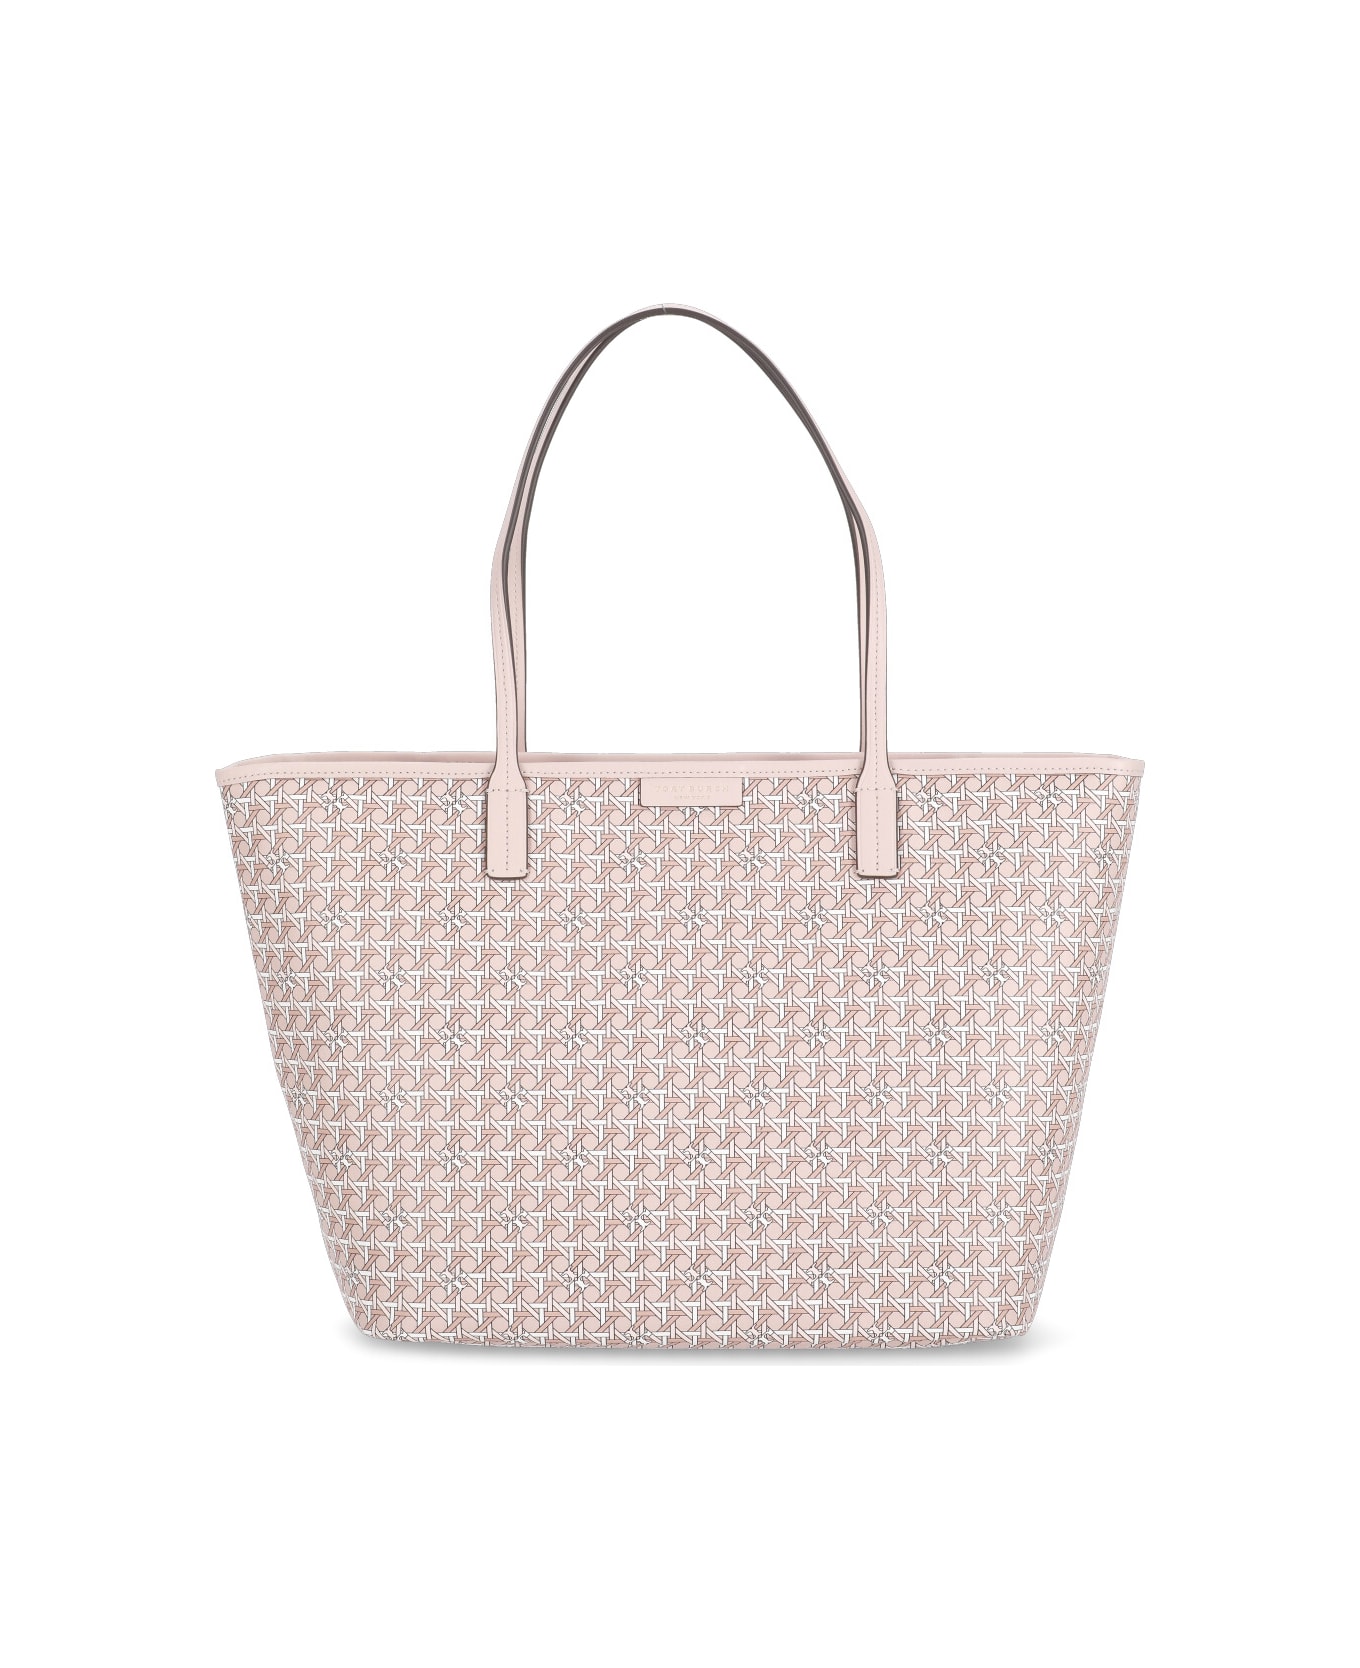 Tory Burch Ever-ready Shopping Bag - Pink